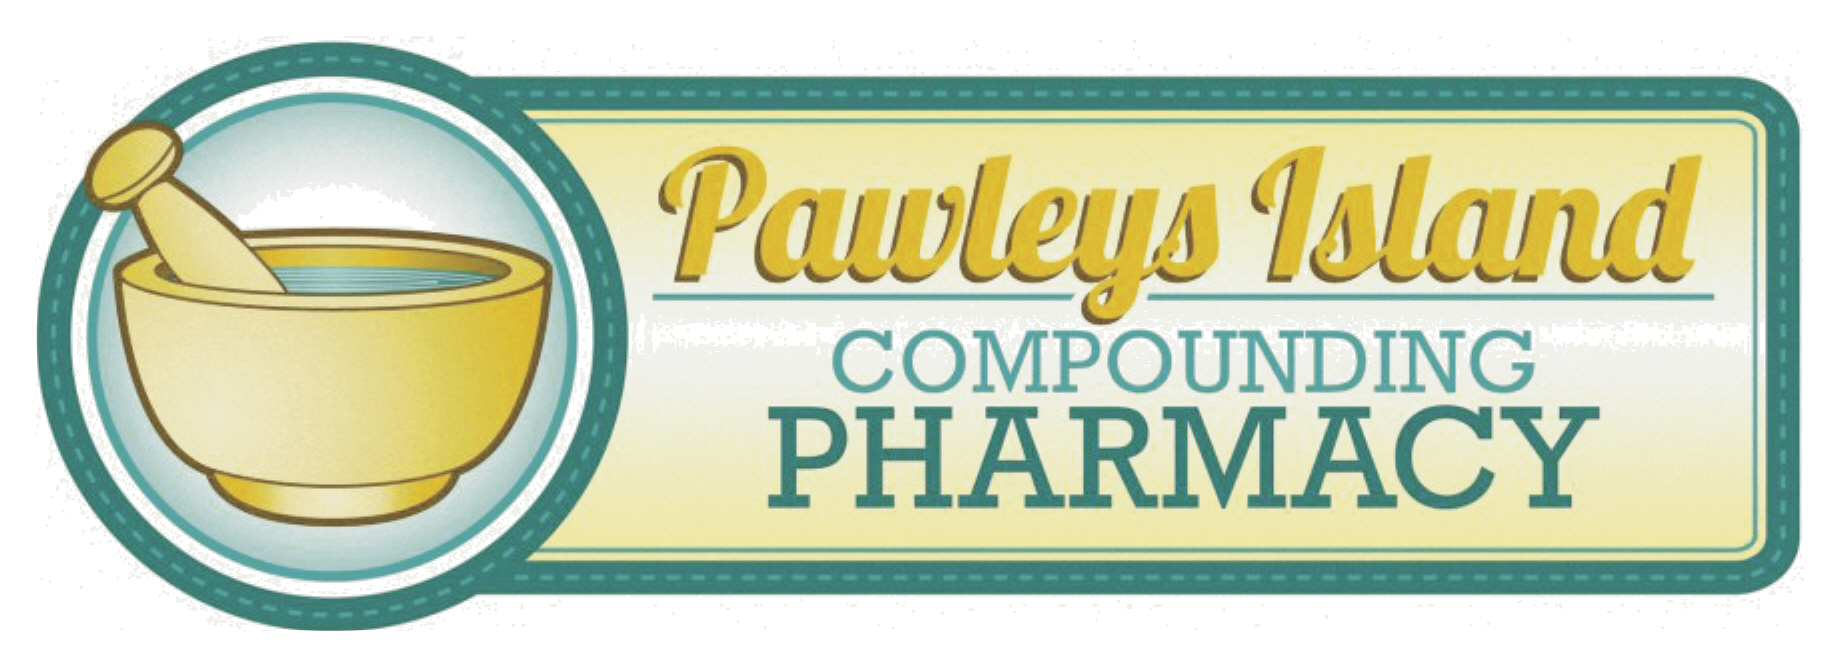 Pawleys Island Compounding Pharmacy